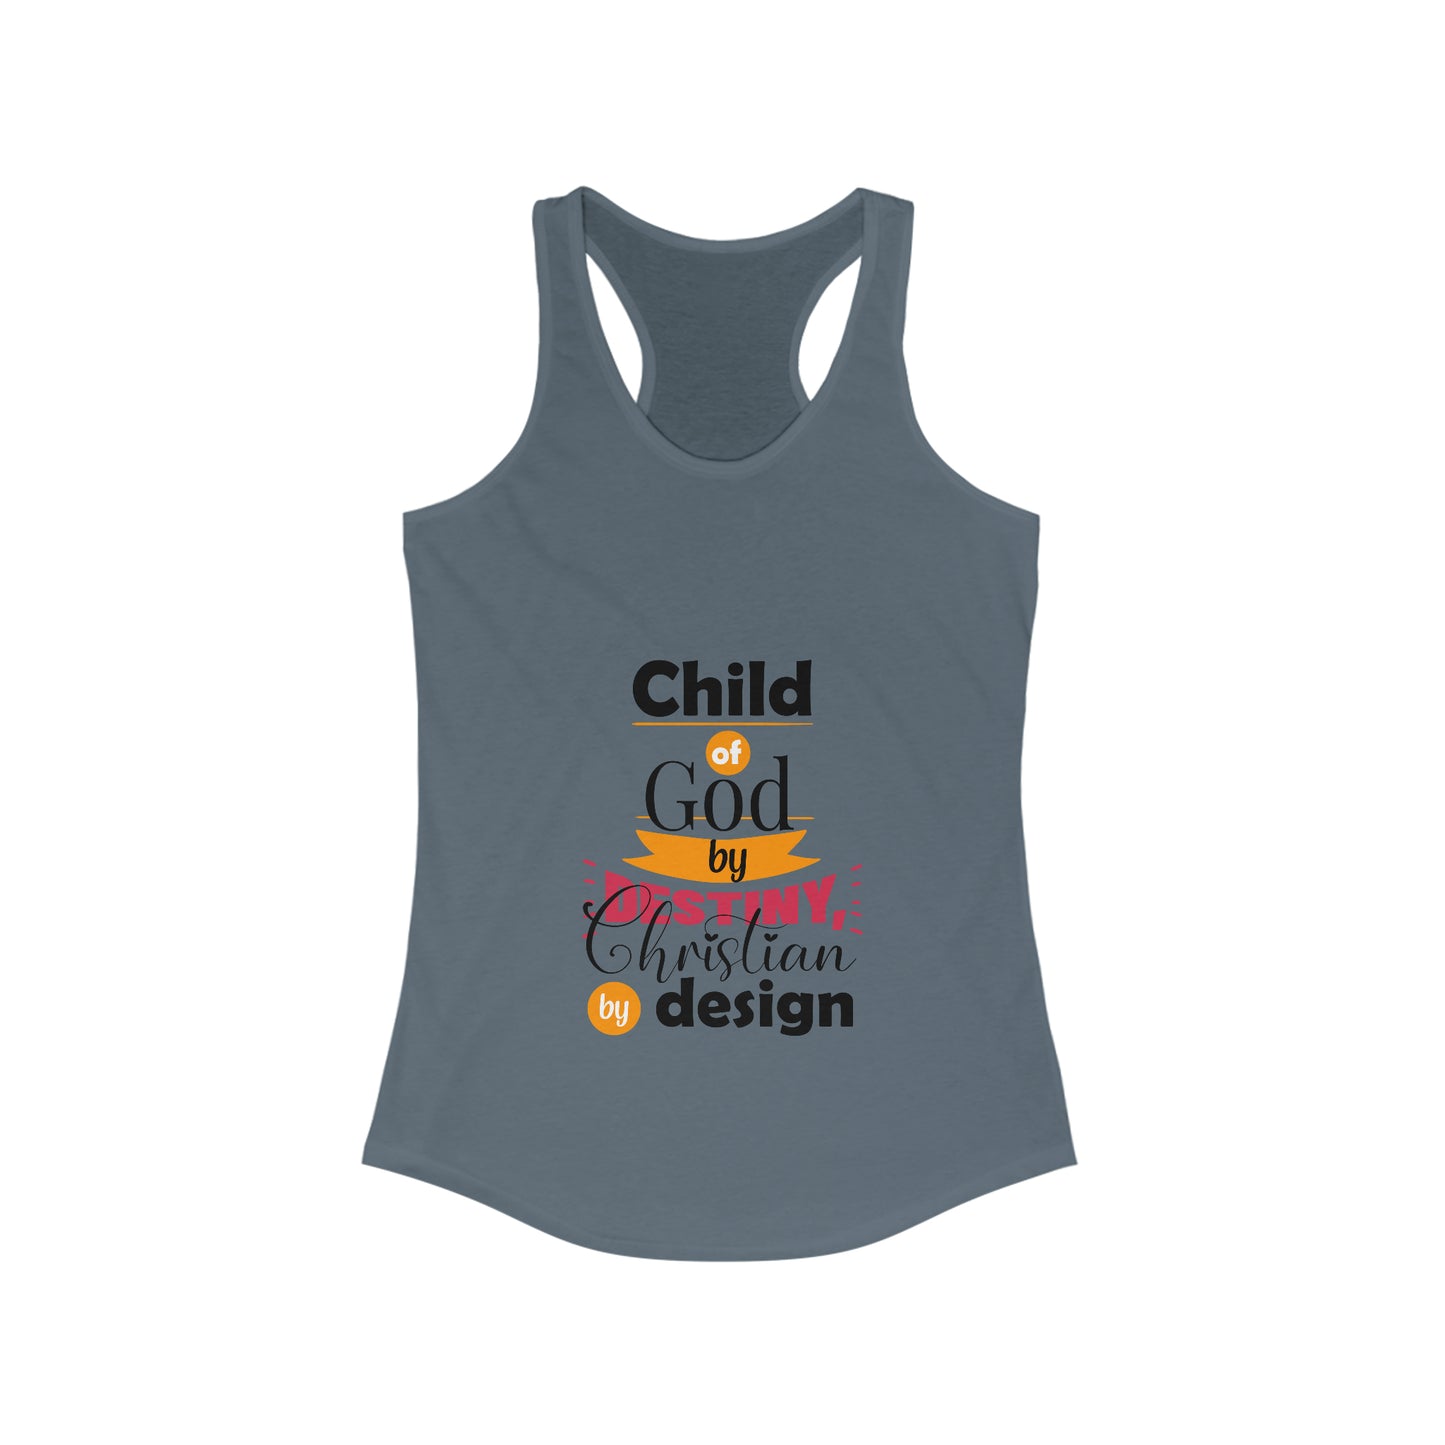 Child Of God By Destiny Christian By Design Slim Fit Tank-top